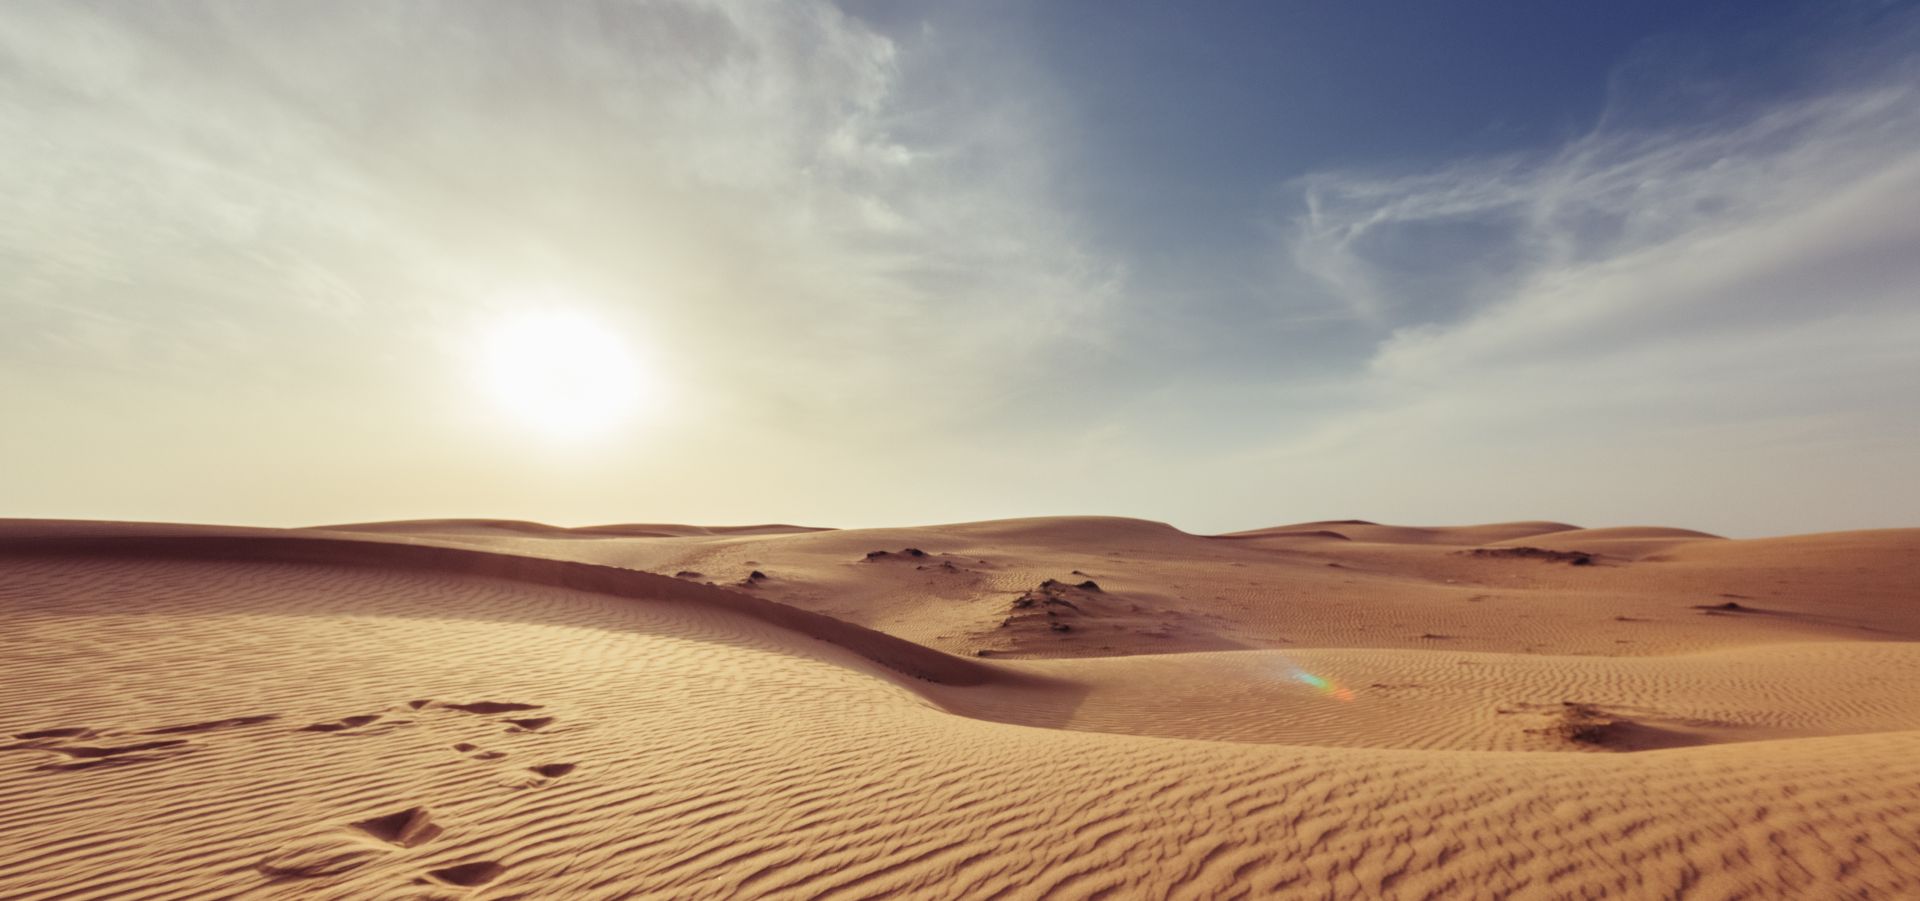 sun shining over the desert in a hazy sky